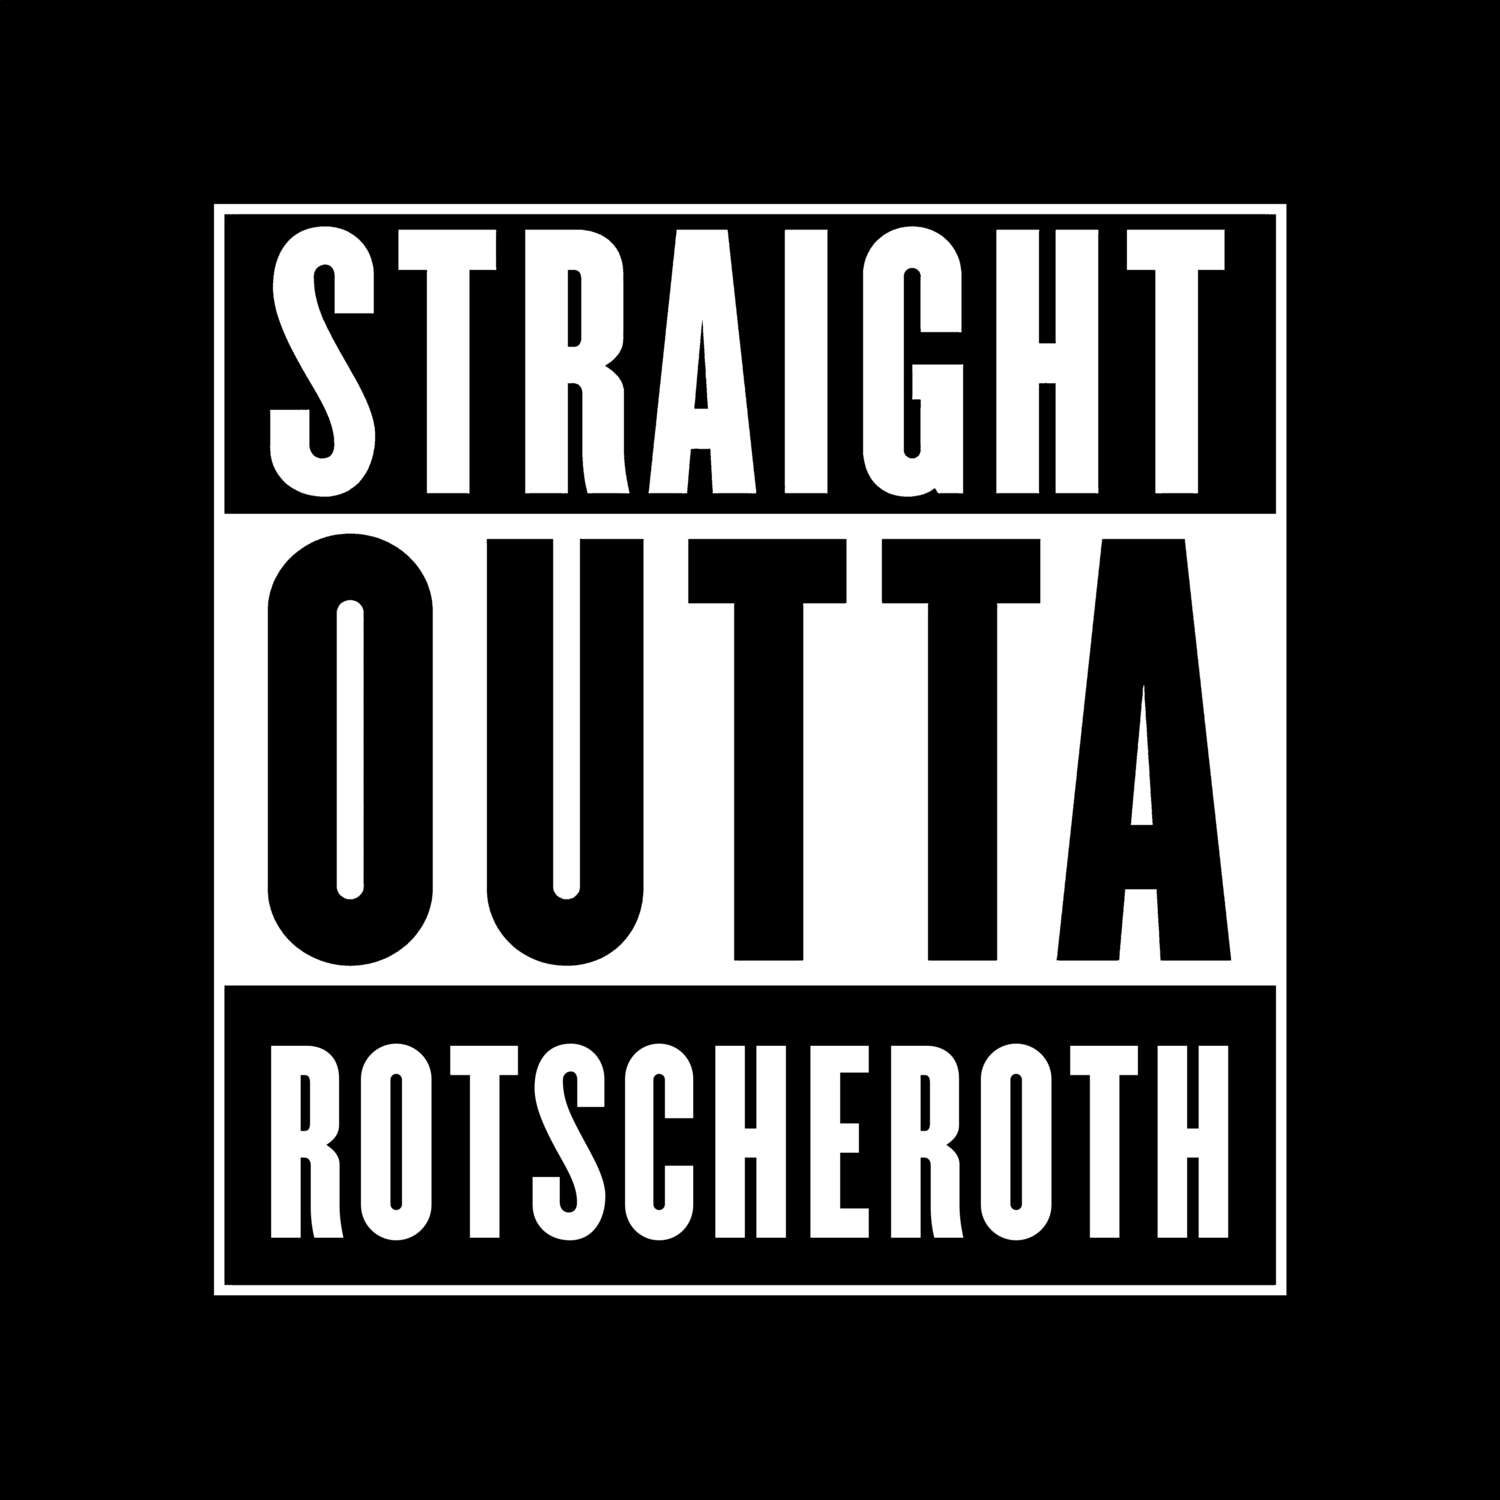 Rotscheroth T-Shirt »Straight Outta«